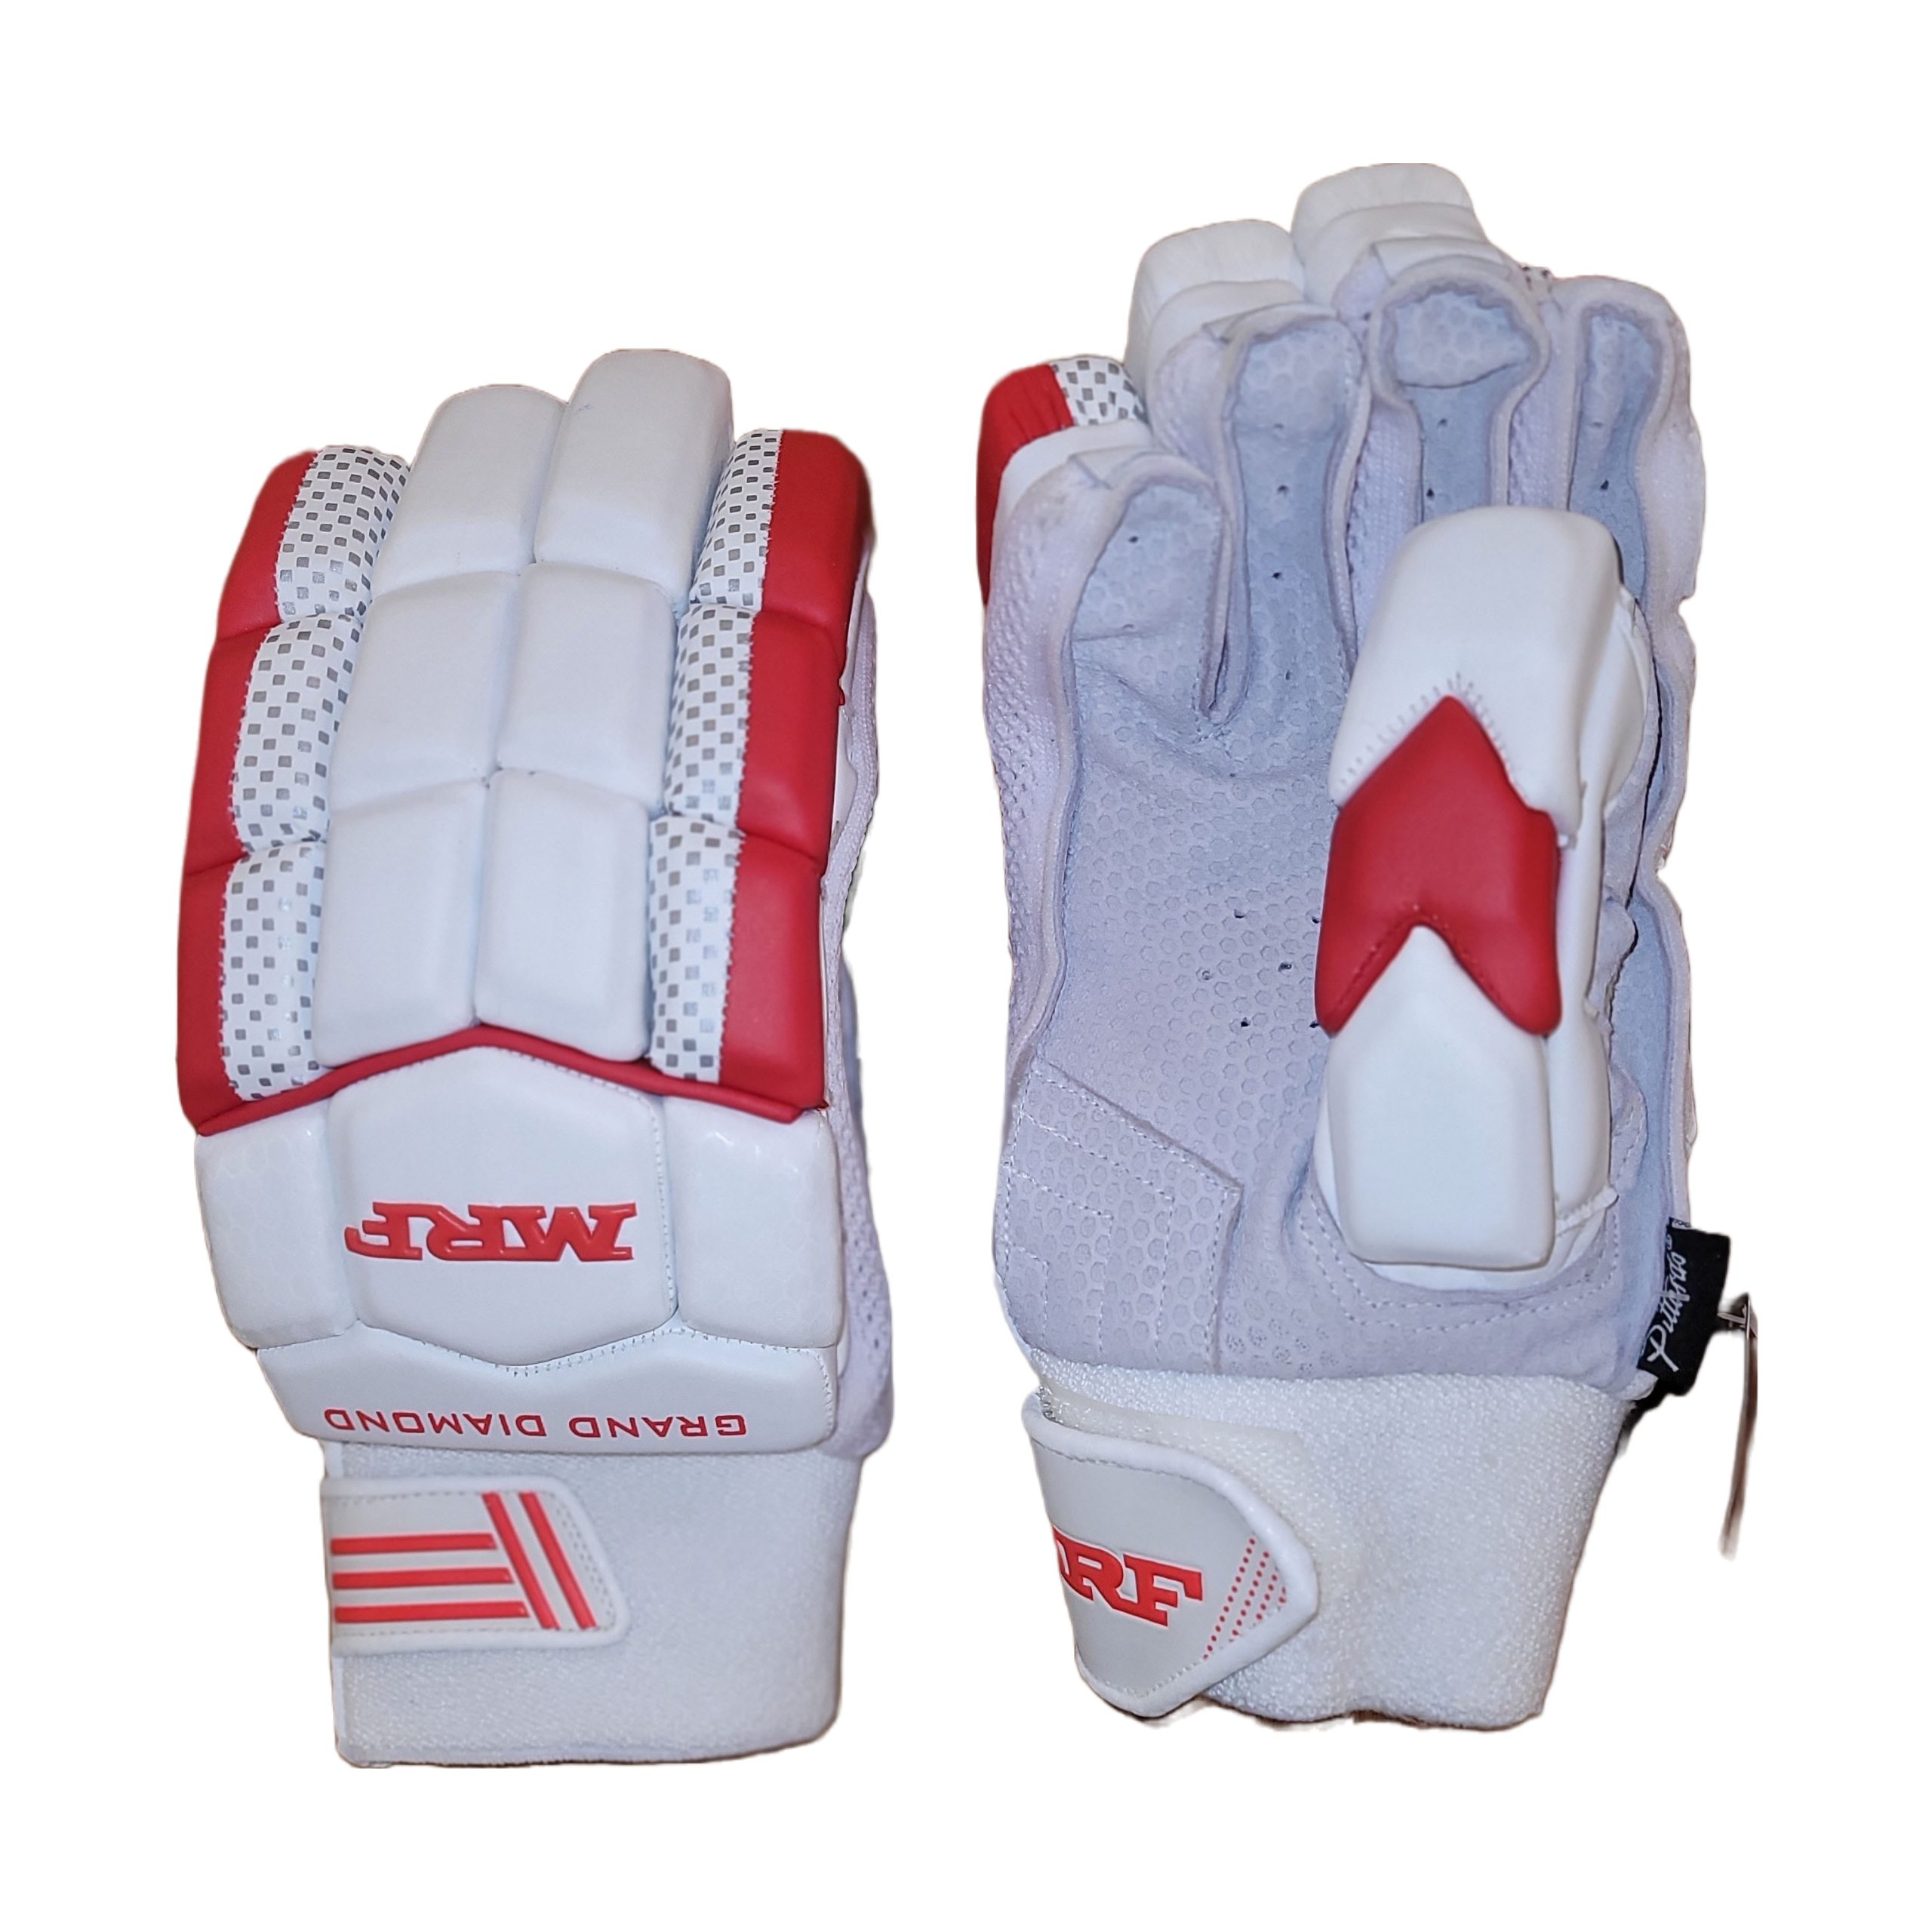 MRF-Grand-Diamond-Batting-Gloves